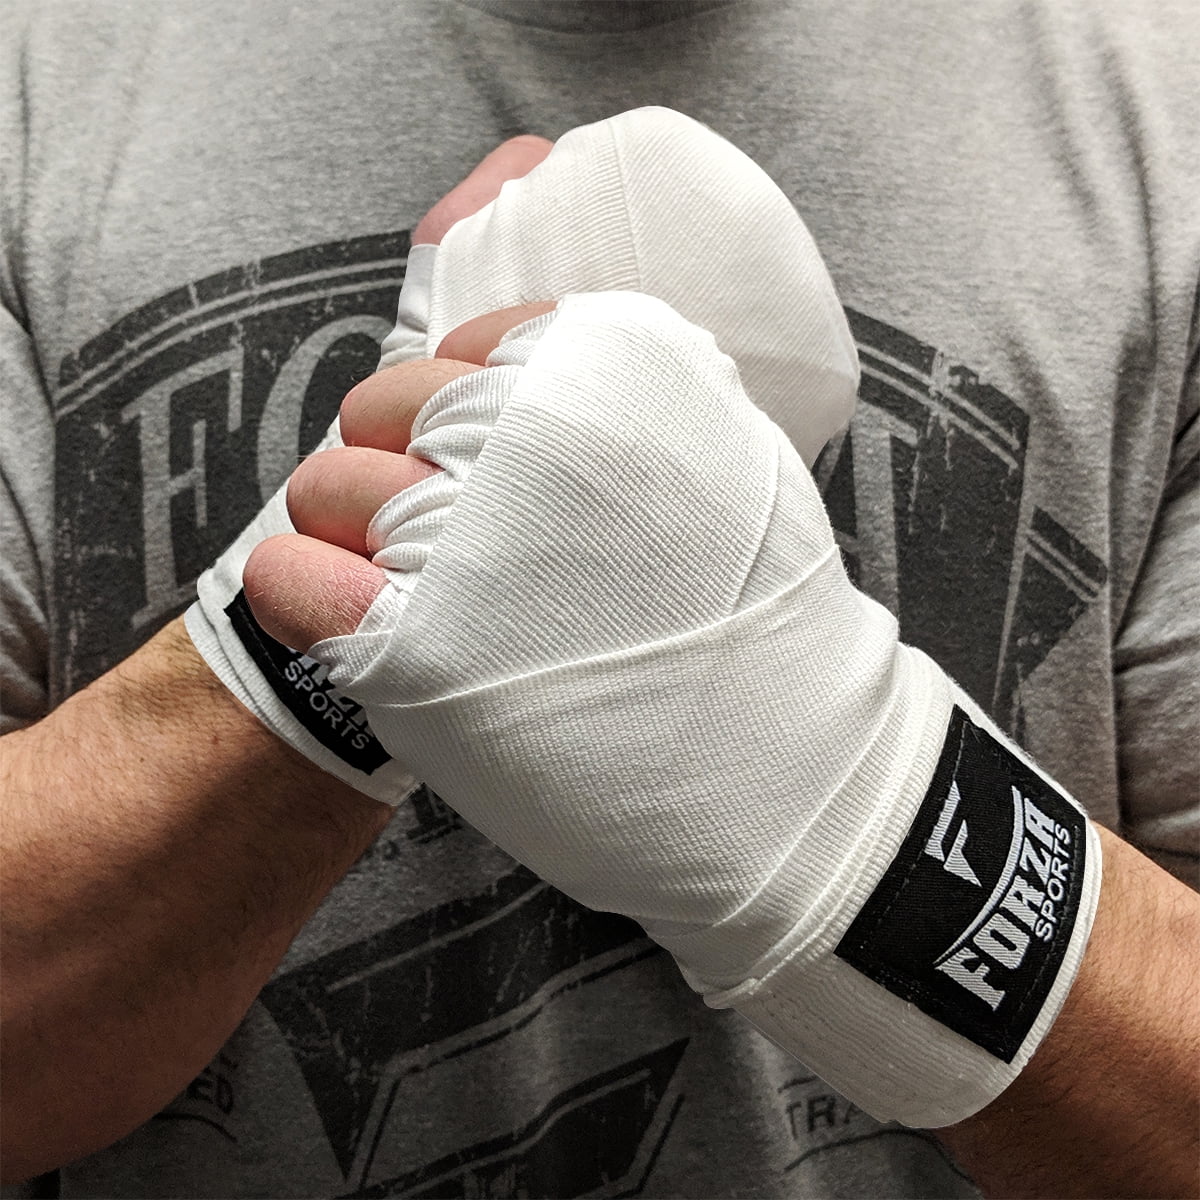 Details about   1PCS Boxing Muay Thai Bandage Hand Wraps Weightlifting Bandage Wristband Support 